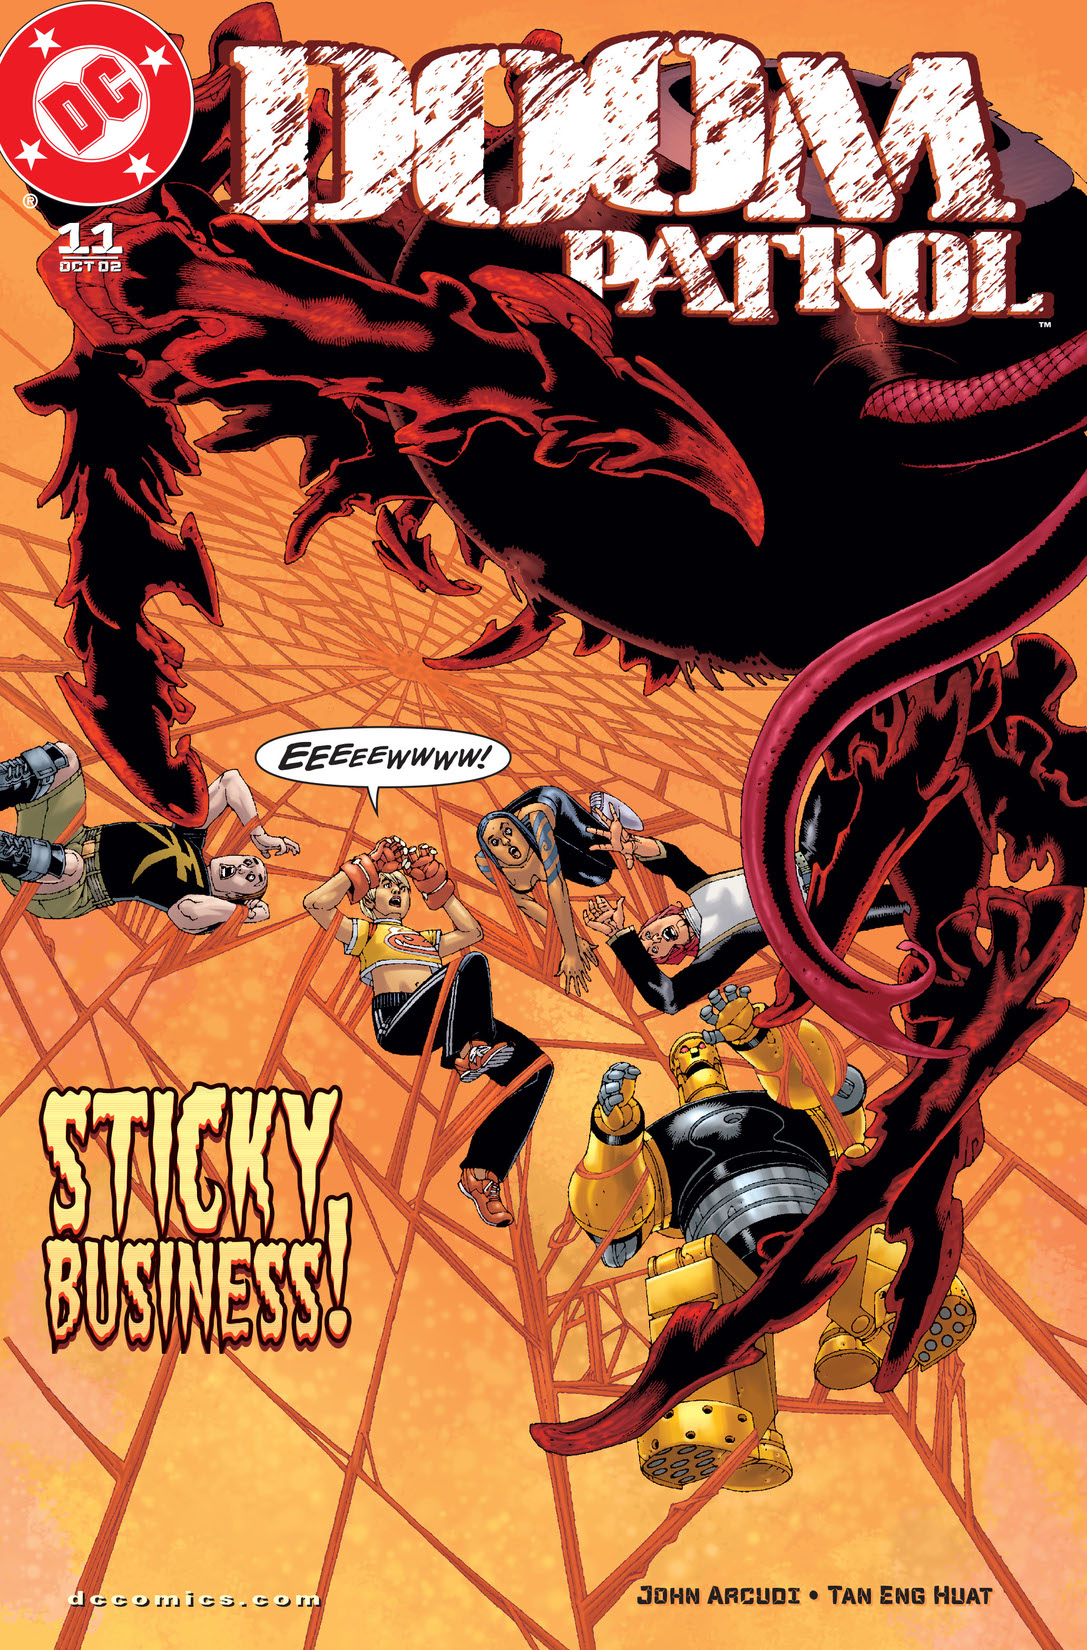 Doom Patrol (2001-) #11 preview images